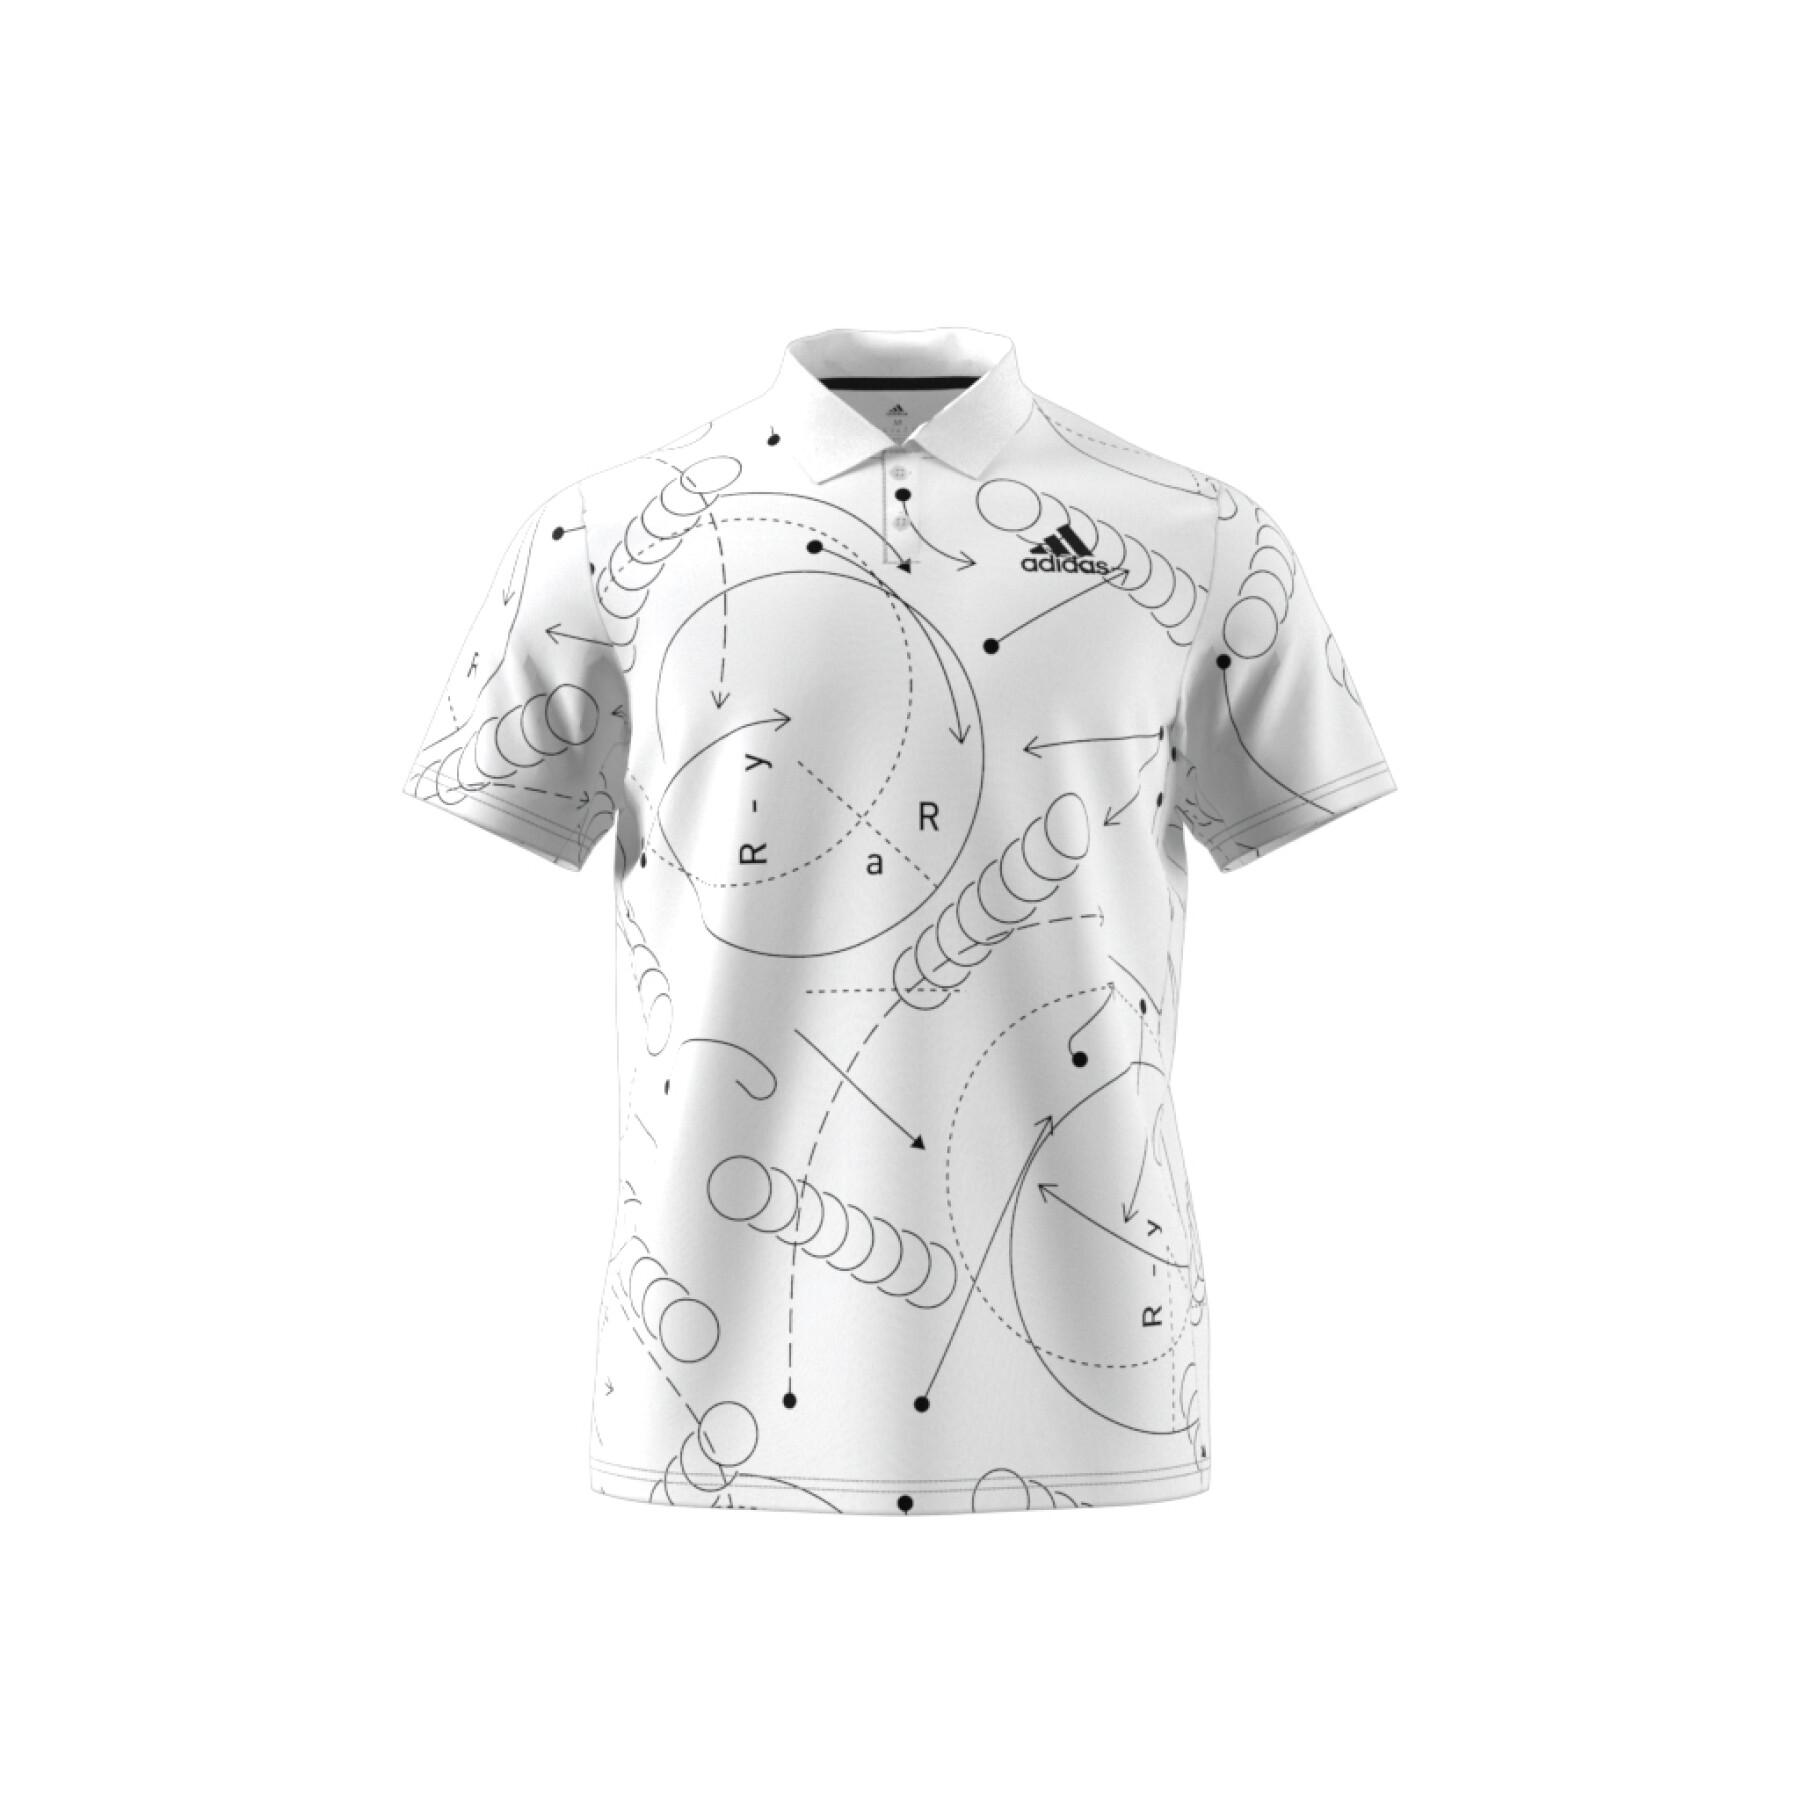 Tennis club polo with print adidas